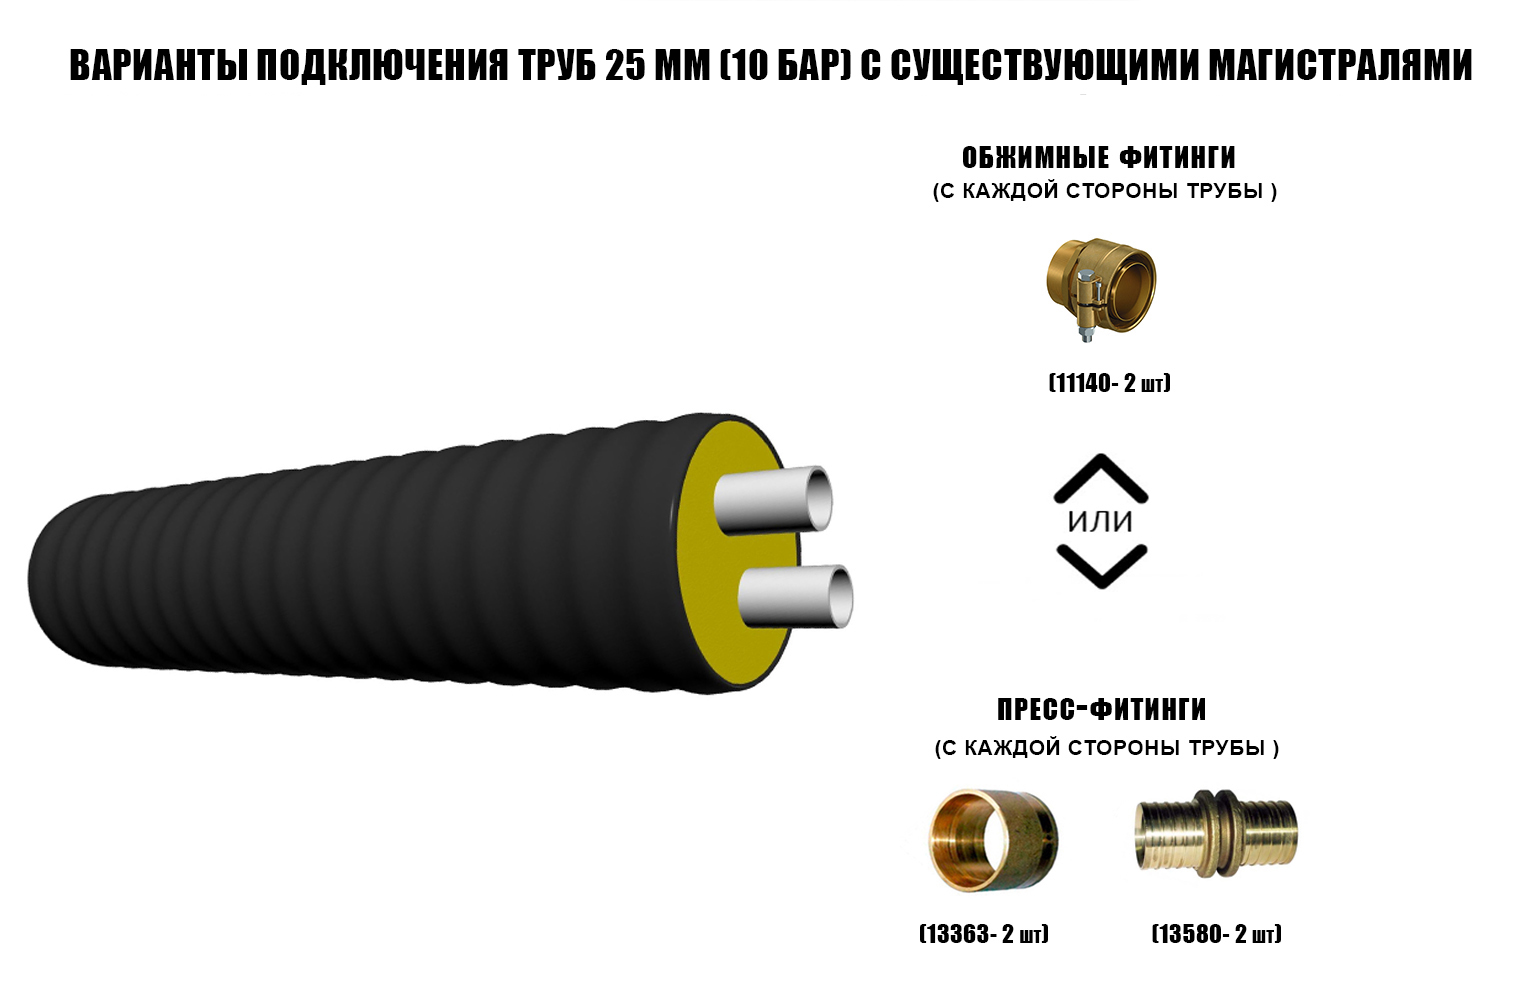 Труба ТВЭЛ-ПЭКС -2 2х25х3,5/110 10 бар, SDR 7,4